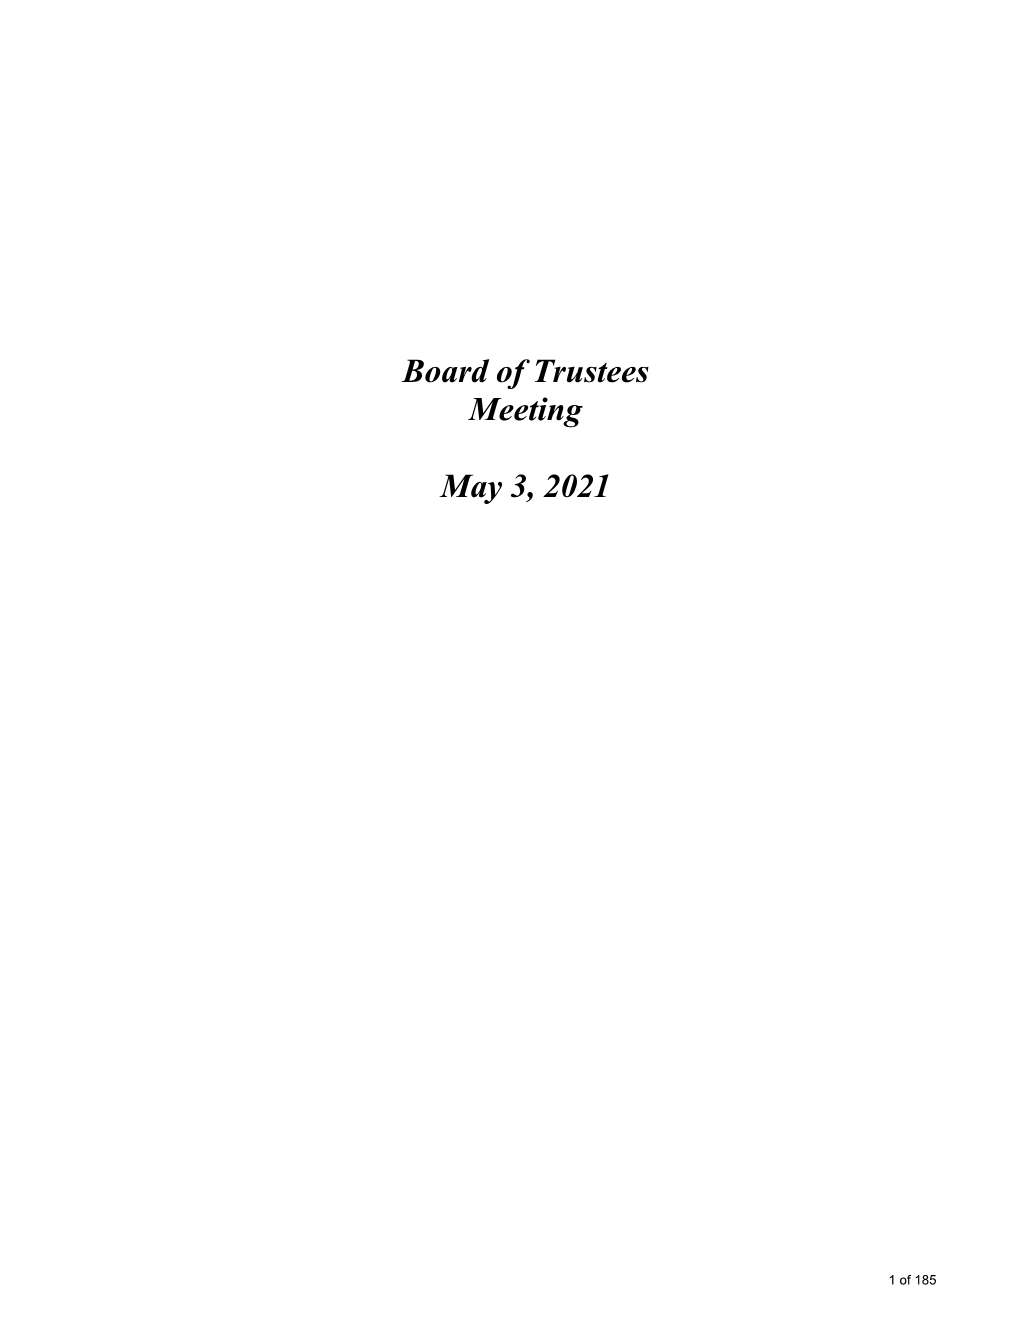 Board of Trustees Meeting May 3, 2021